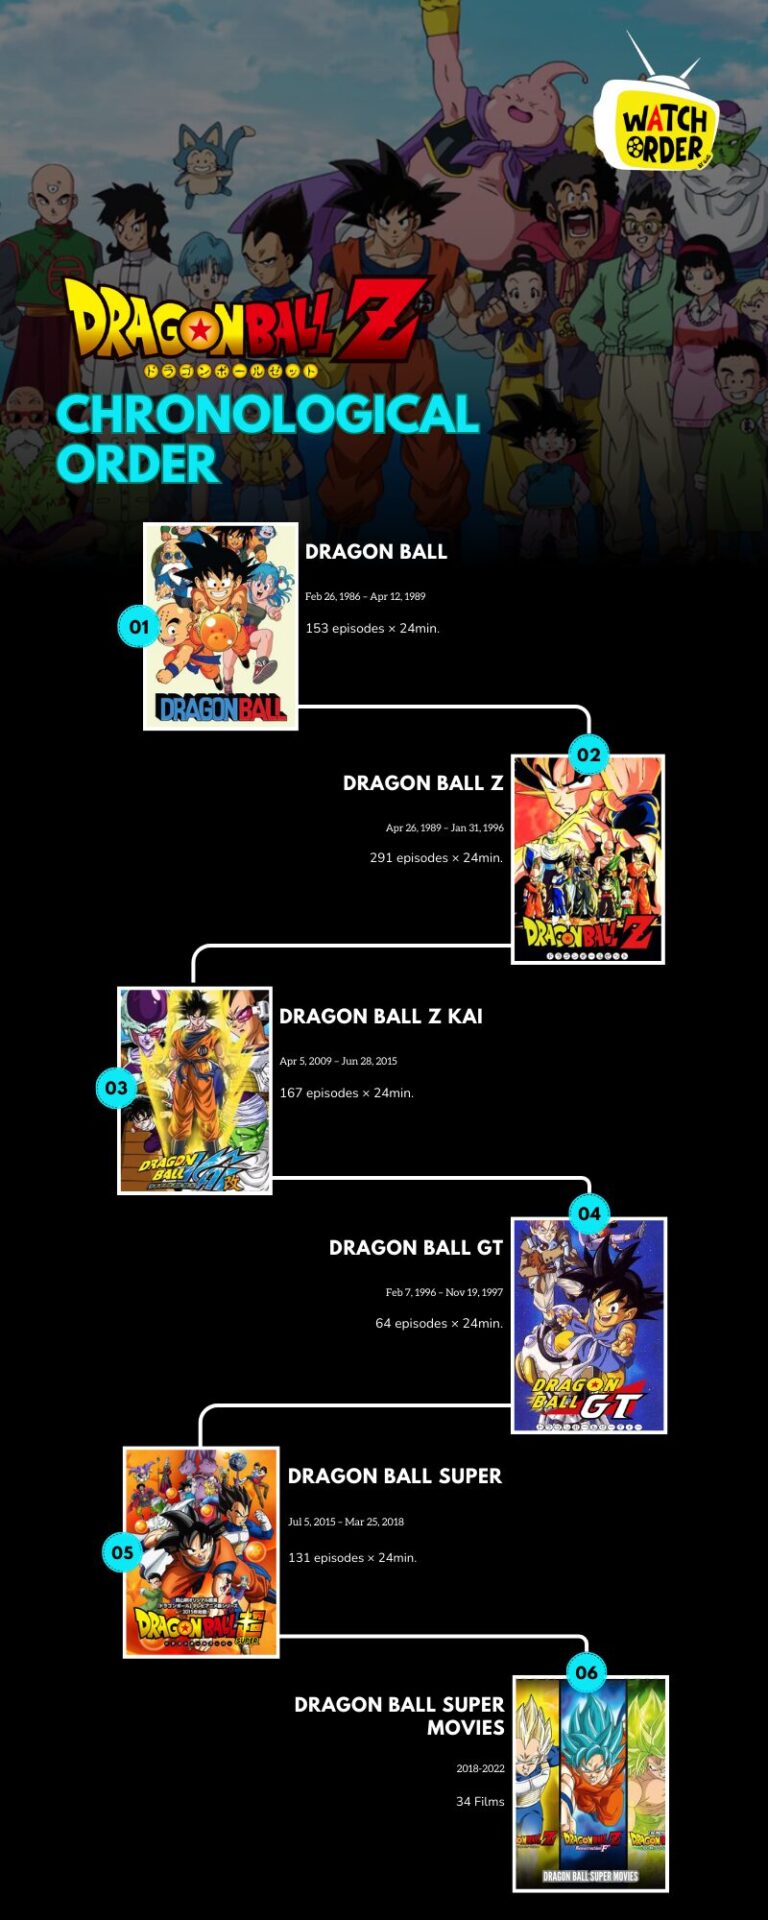 Dragon Ball Chronological Order infographic